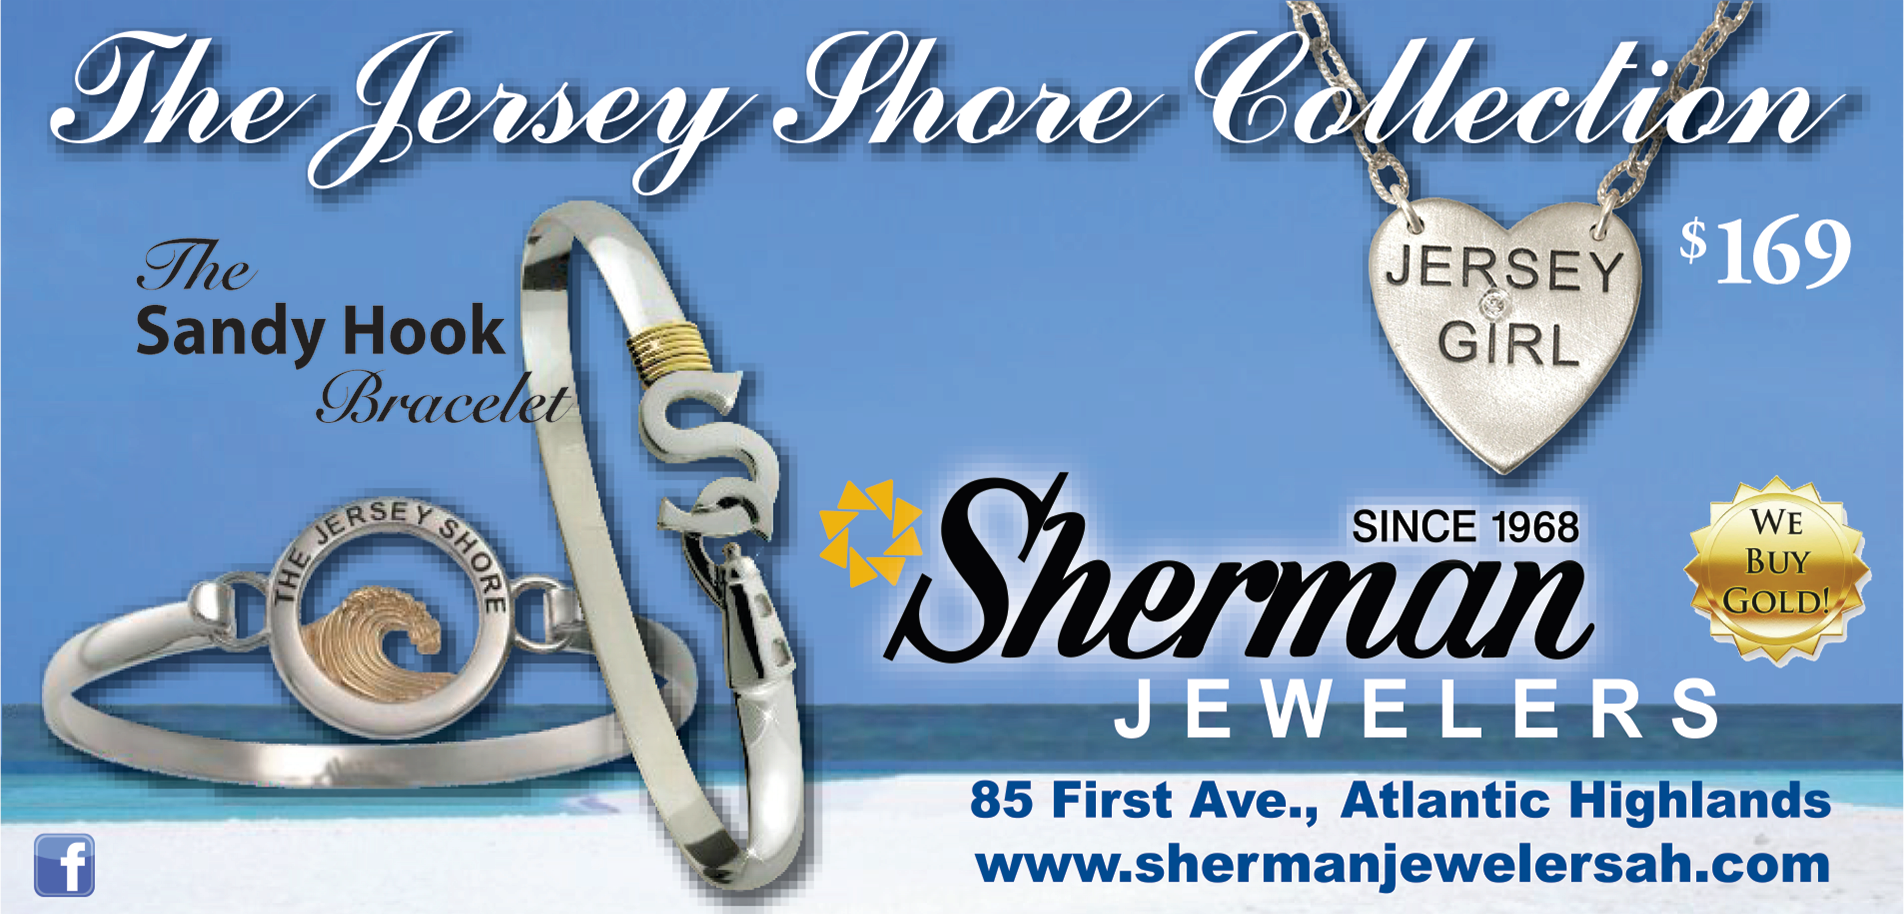 Sherman Jewelers Print Ad